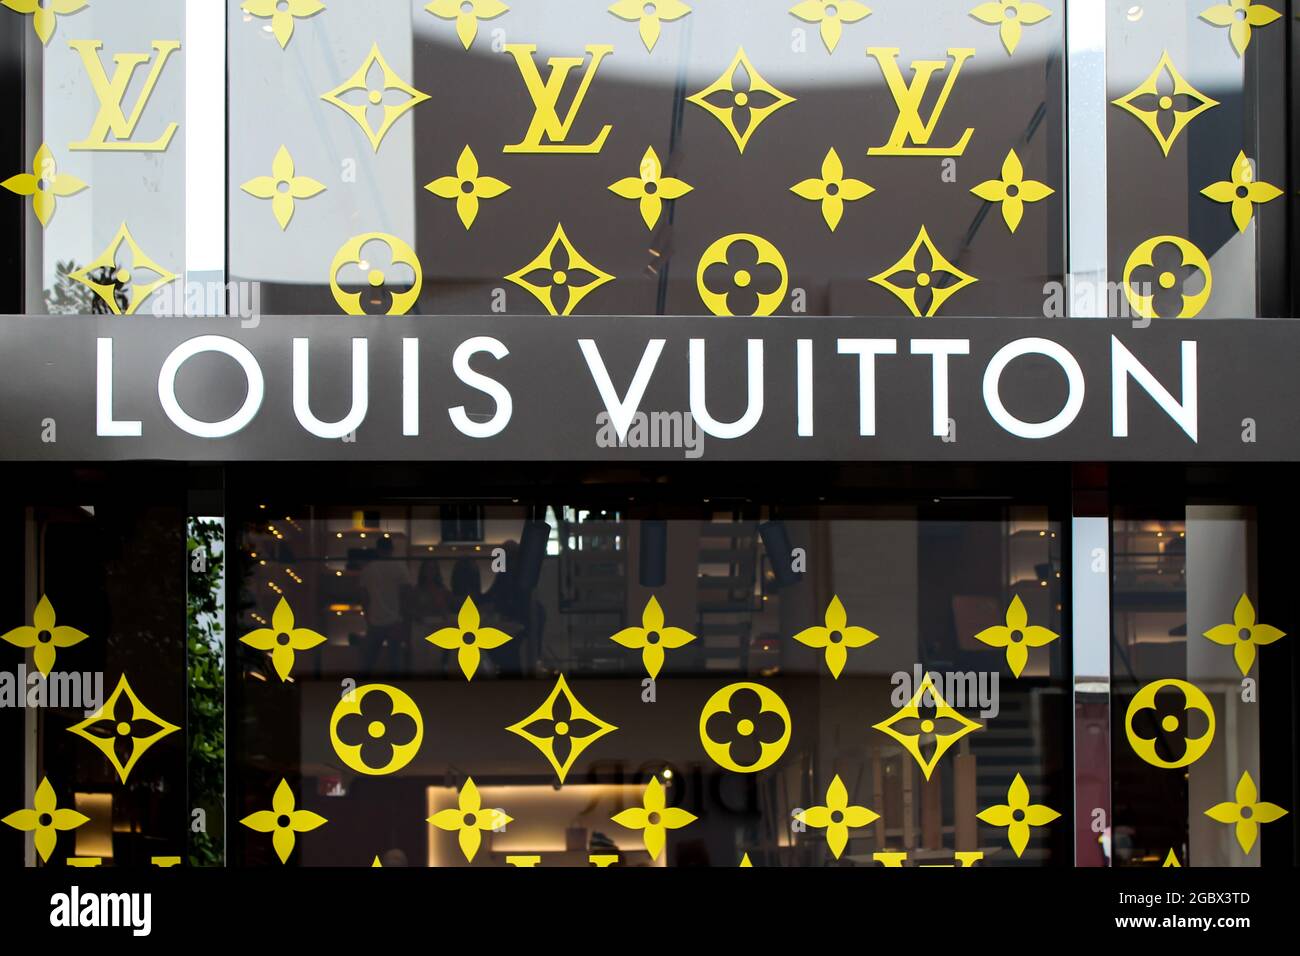 Louis vuitton's store at Miami design district